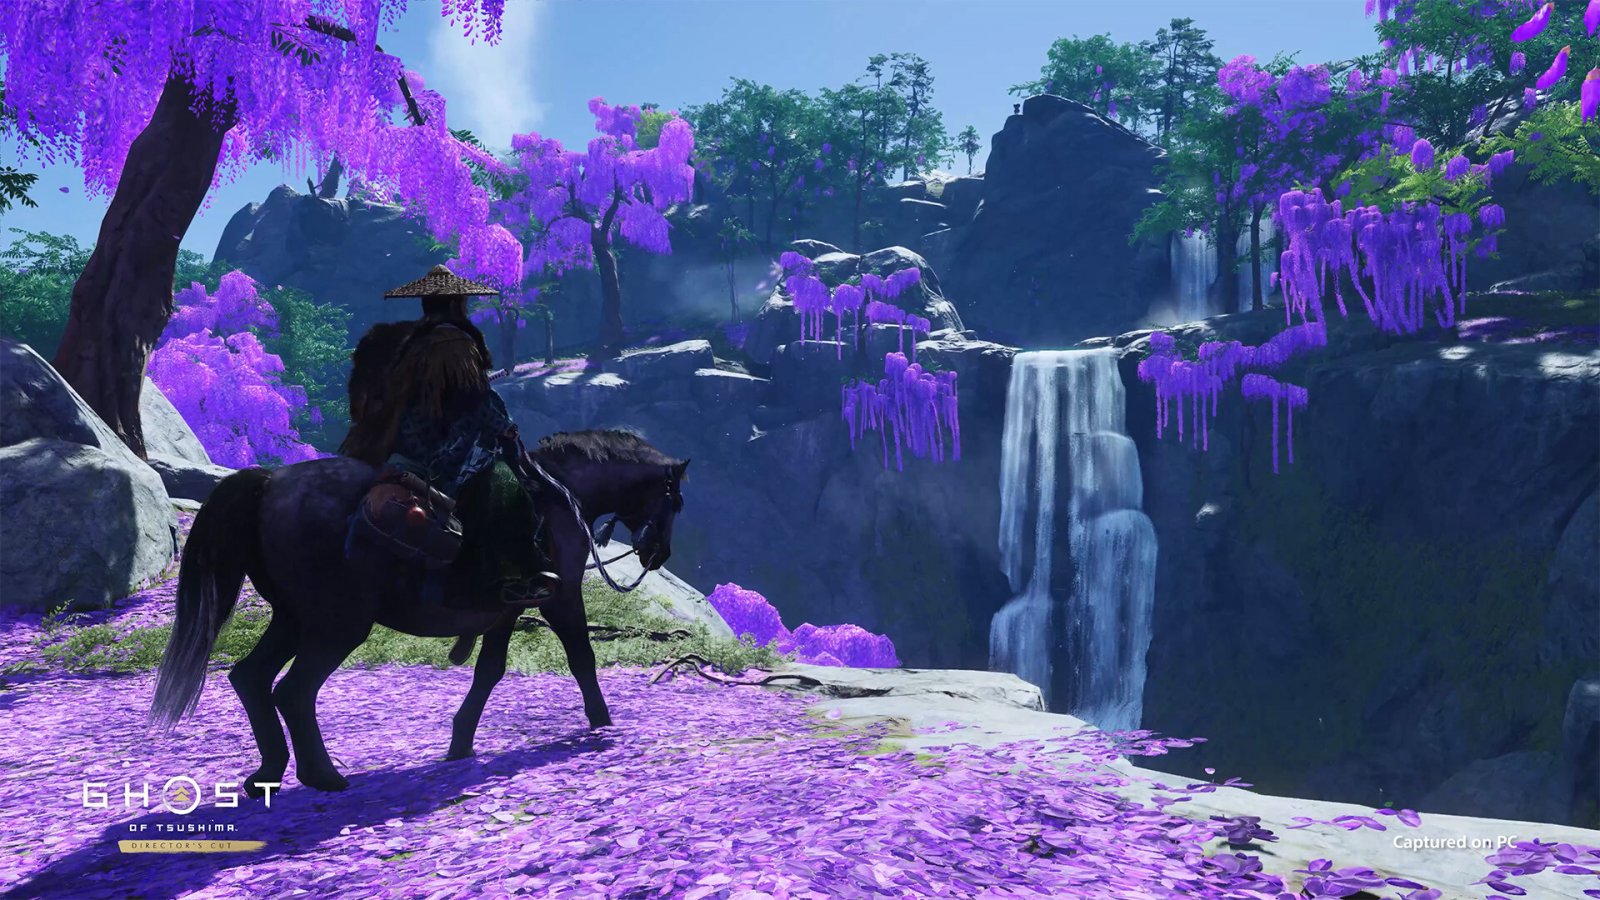 Jin Sakai in groppa a un cavallo in una foresta color viola